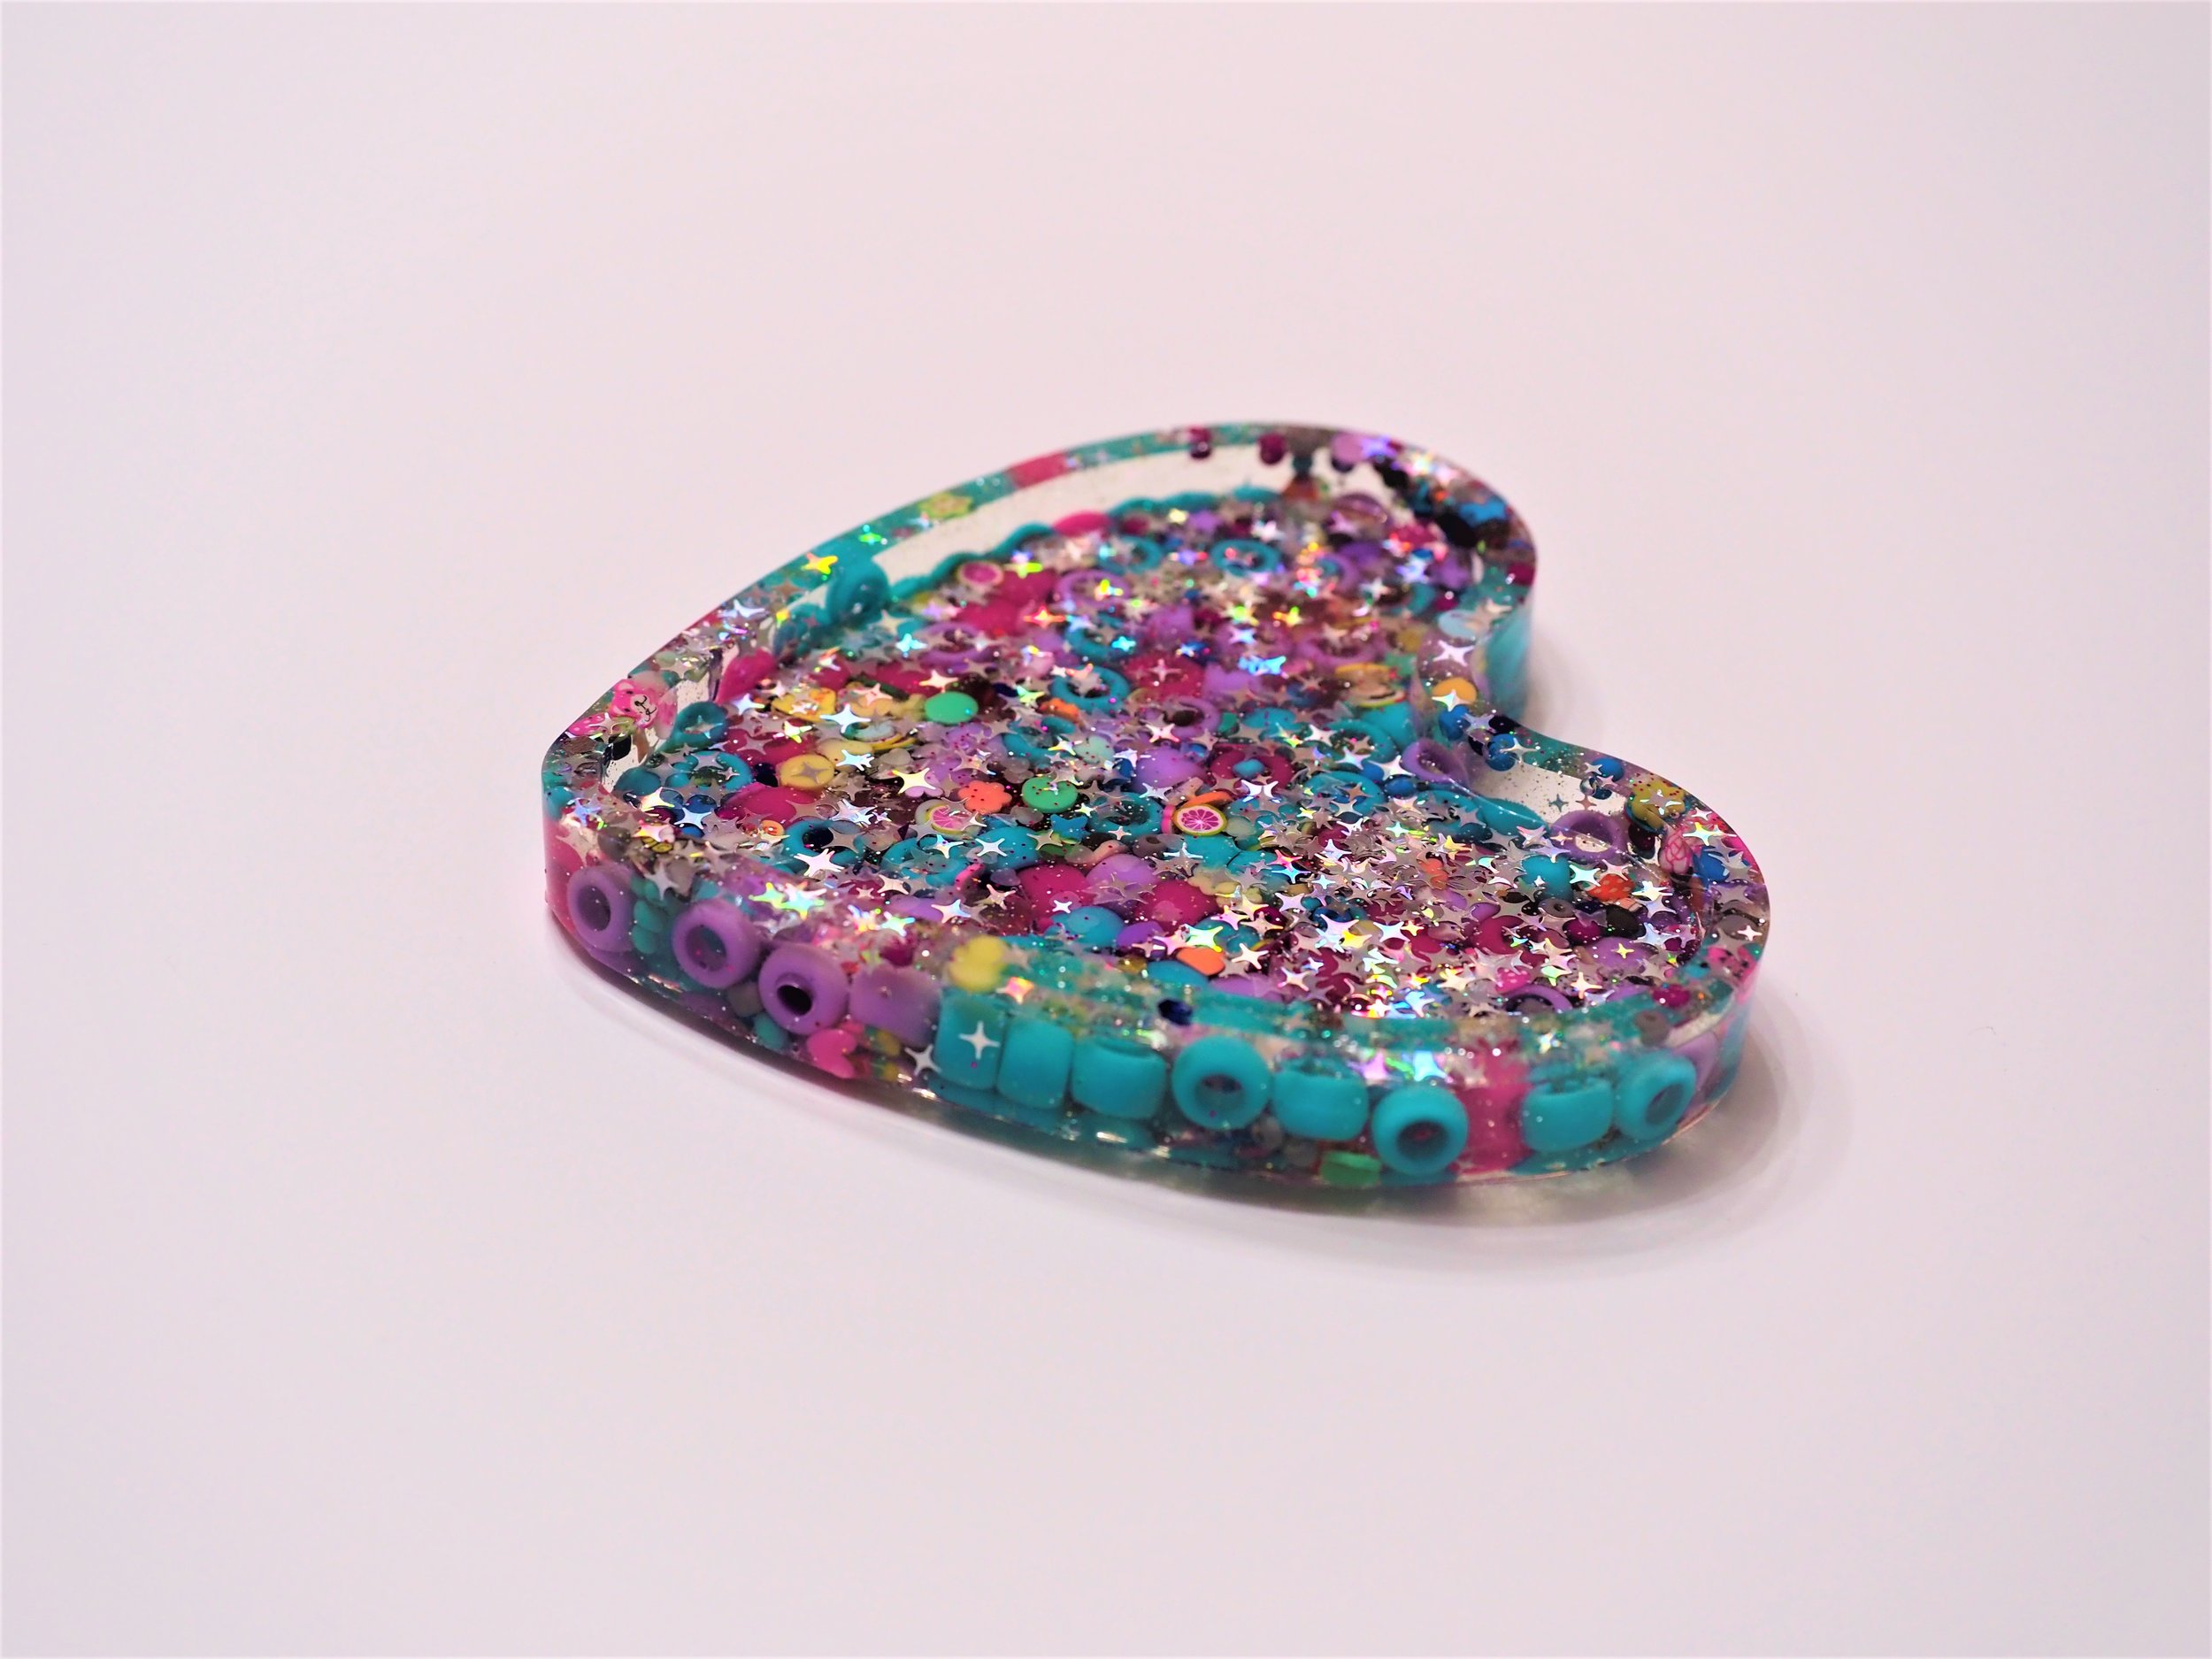 Heart-Shaped Coaster - Pony Beads Purple Teal Pink Random Glitter  (10).JPG